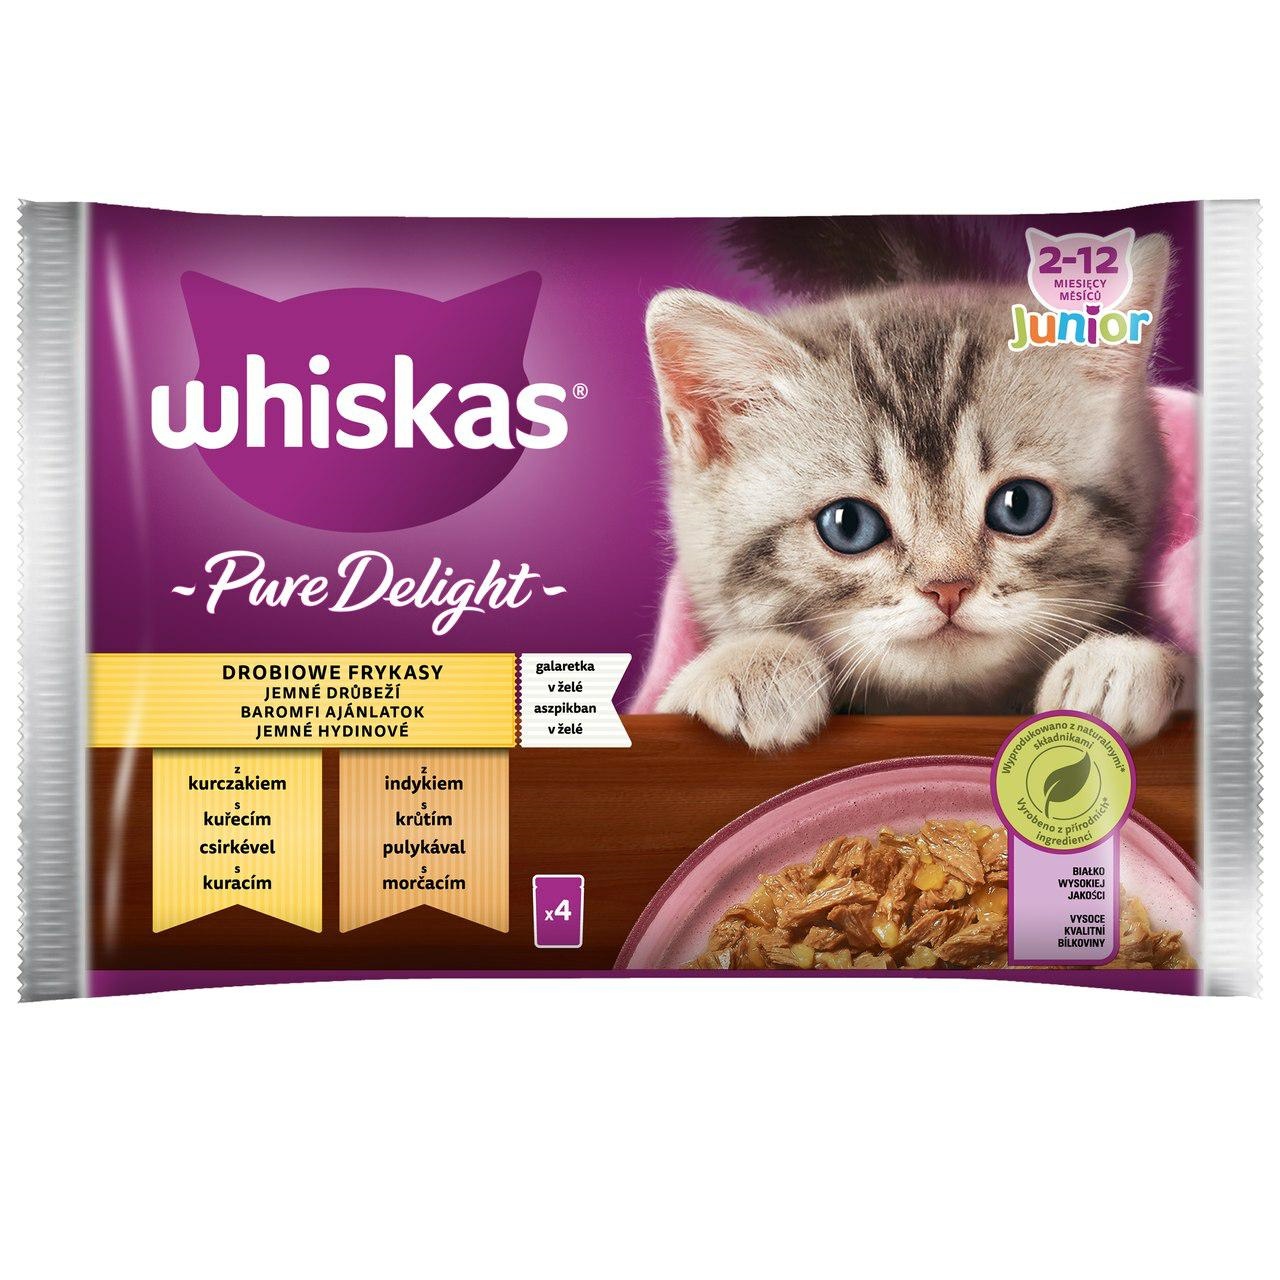 Whiskas Junior Pure Delight Drobiowe Frykasy w galaretce dla kota 4x85g